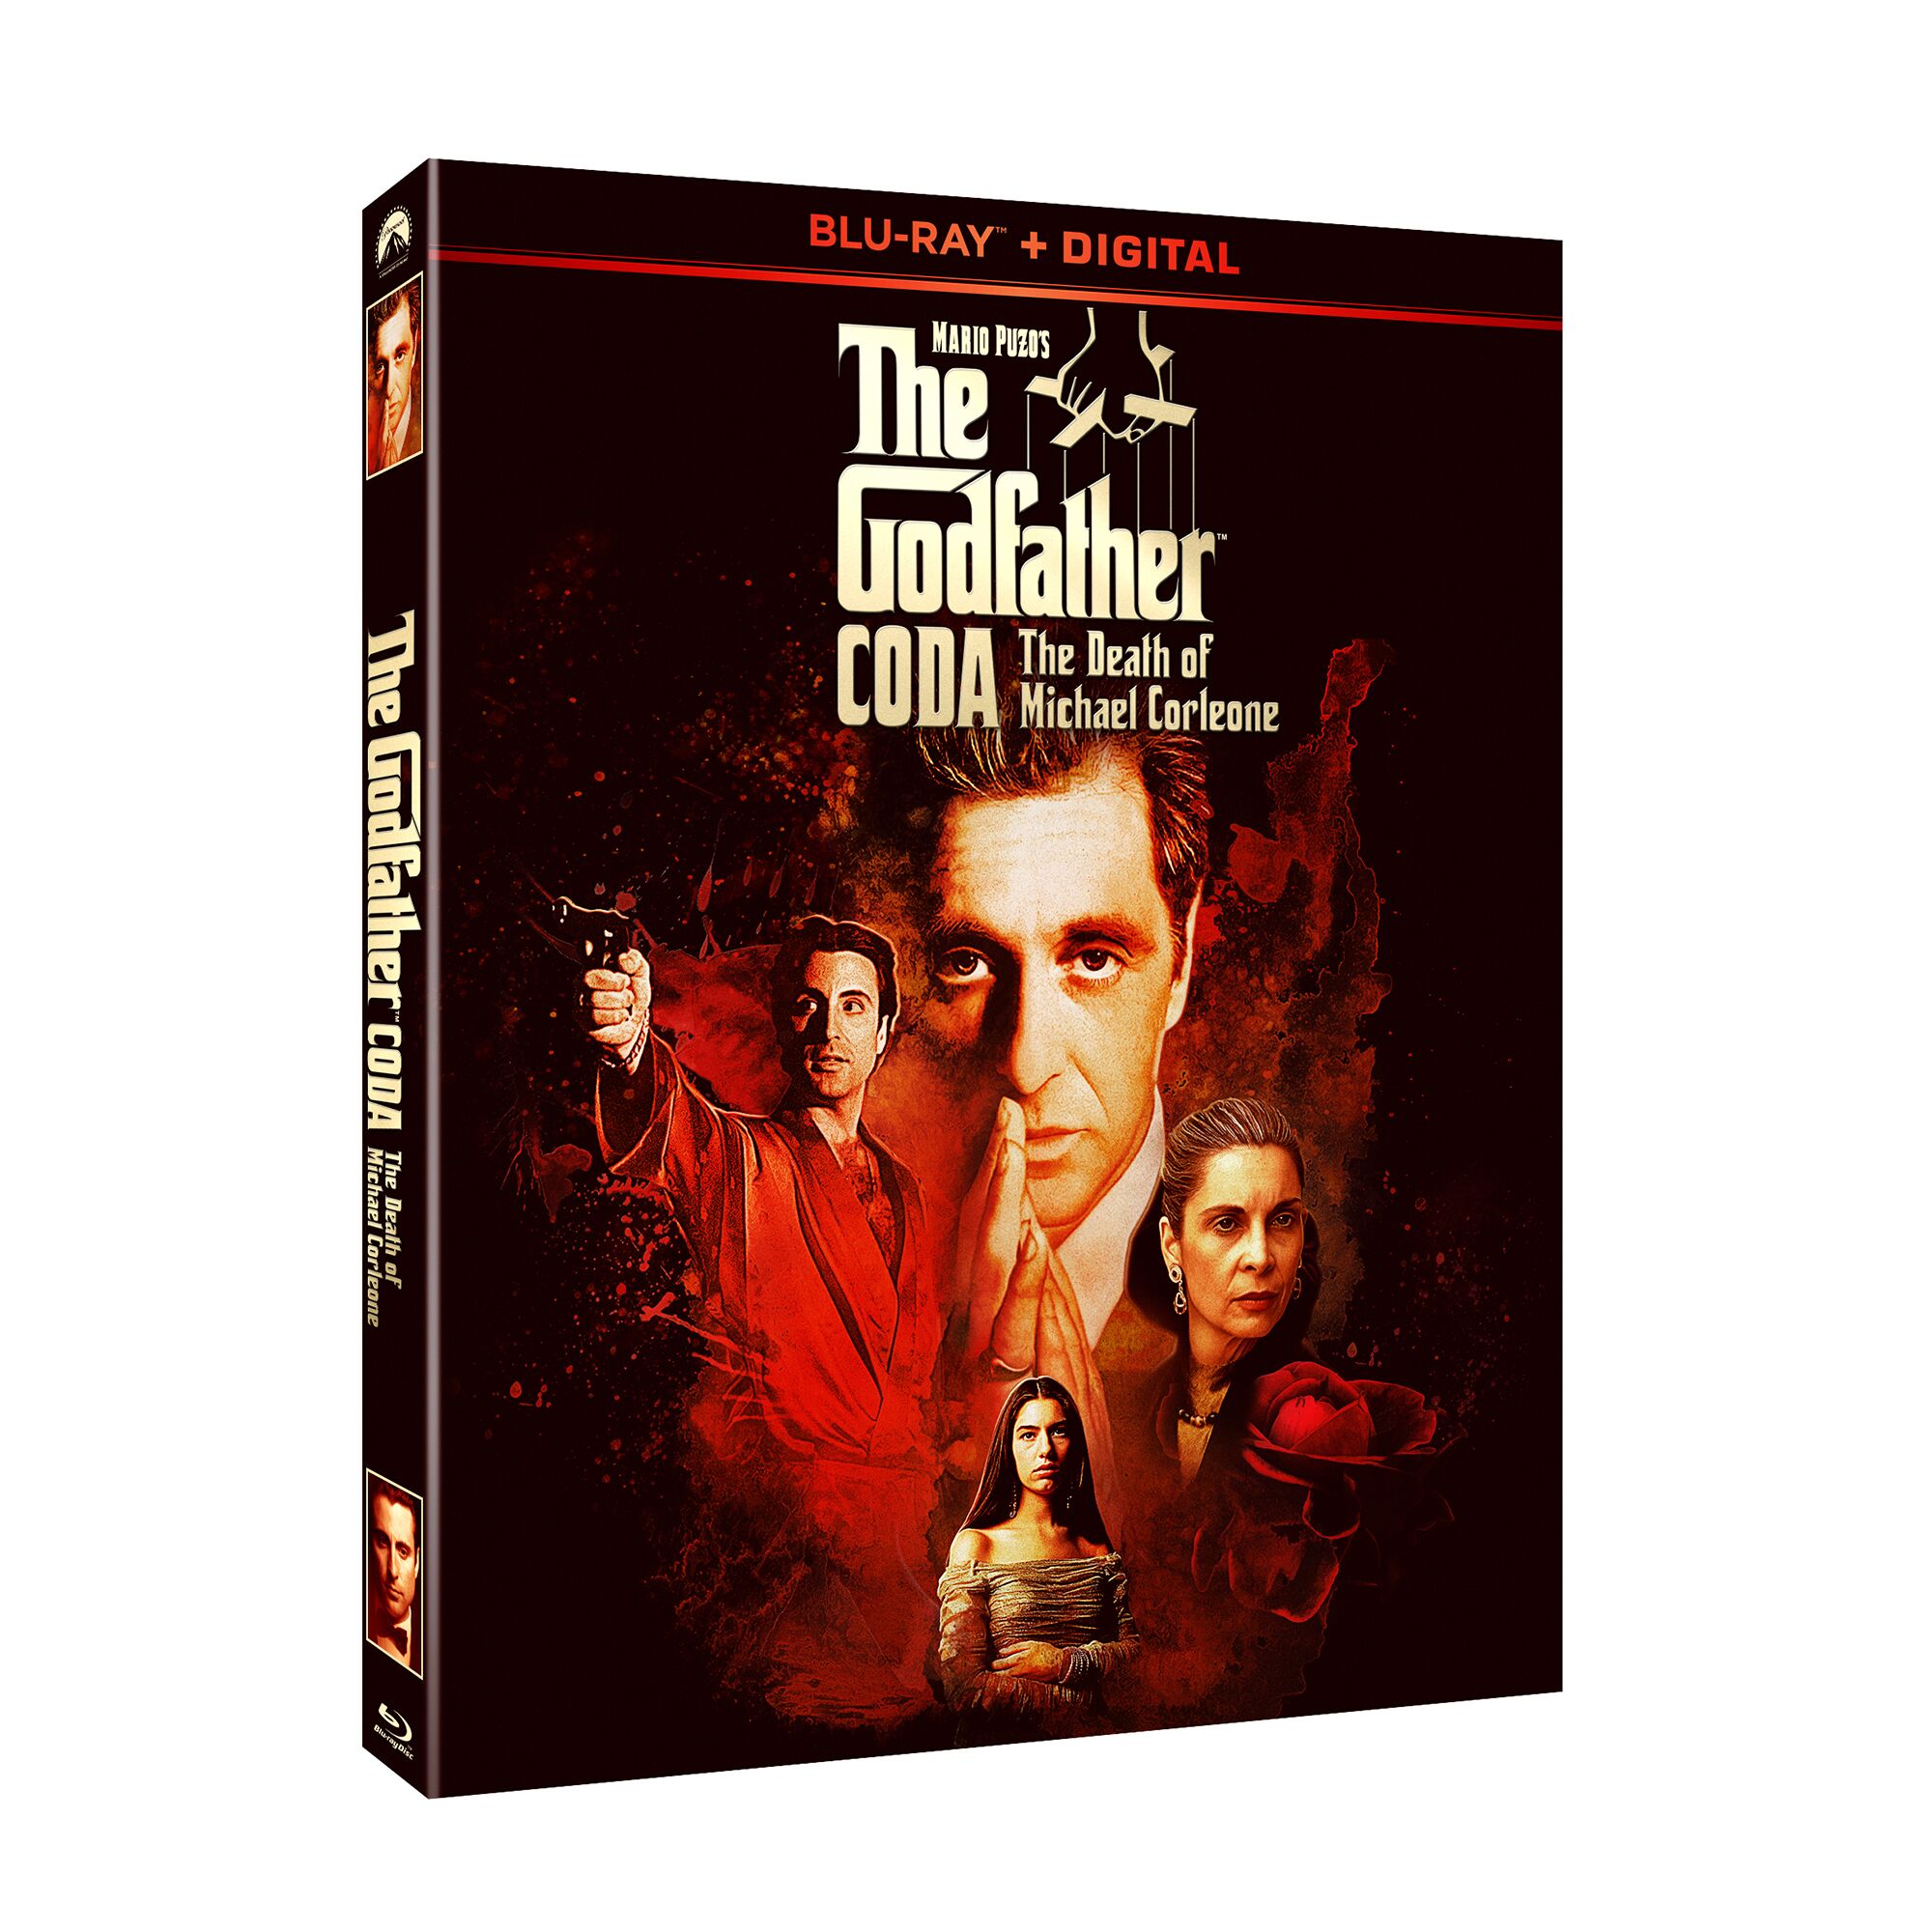 Box set of Mario Puzo's The Godfather, Coda: The Death of Michael Corleone